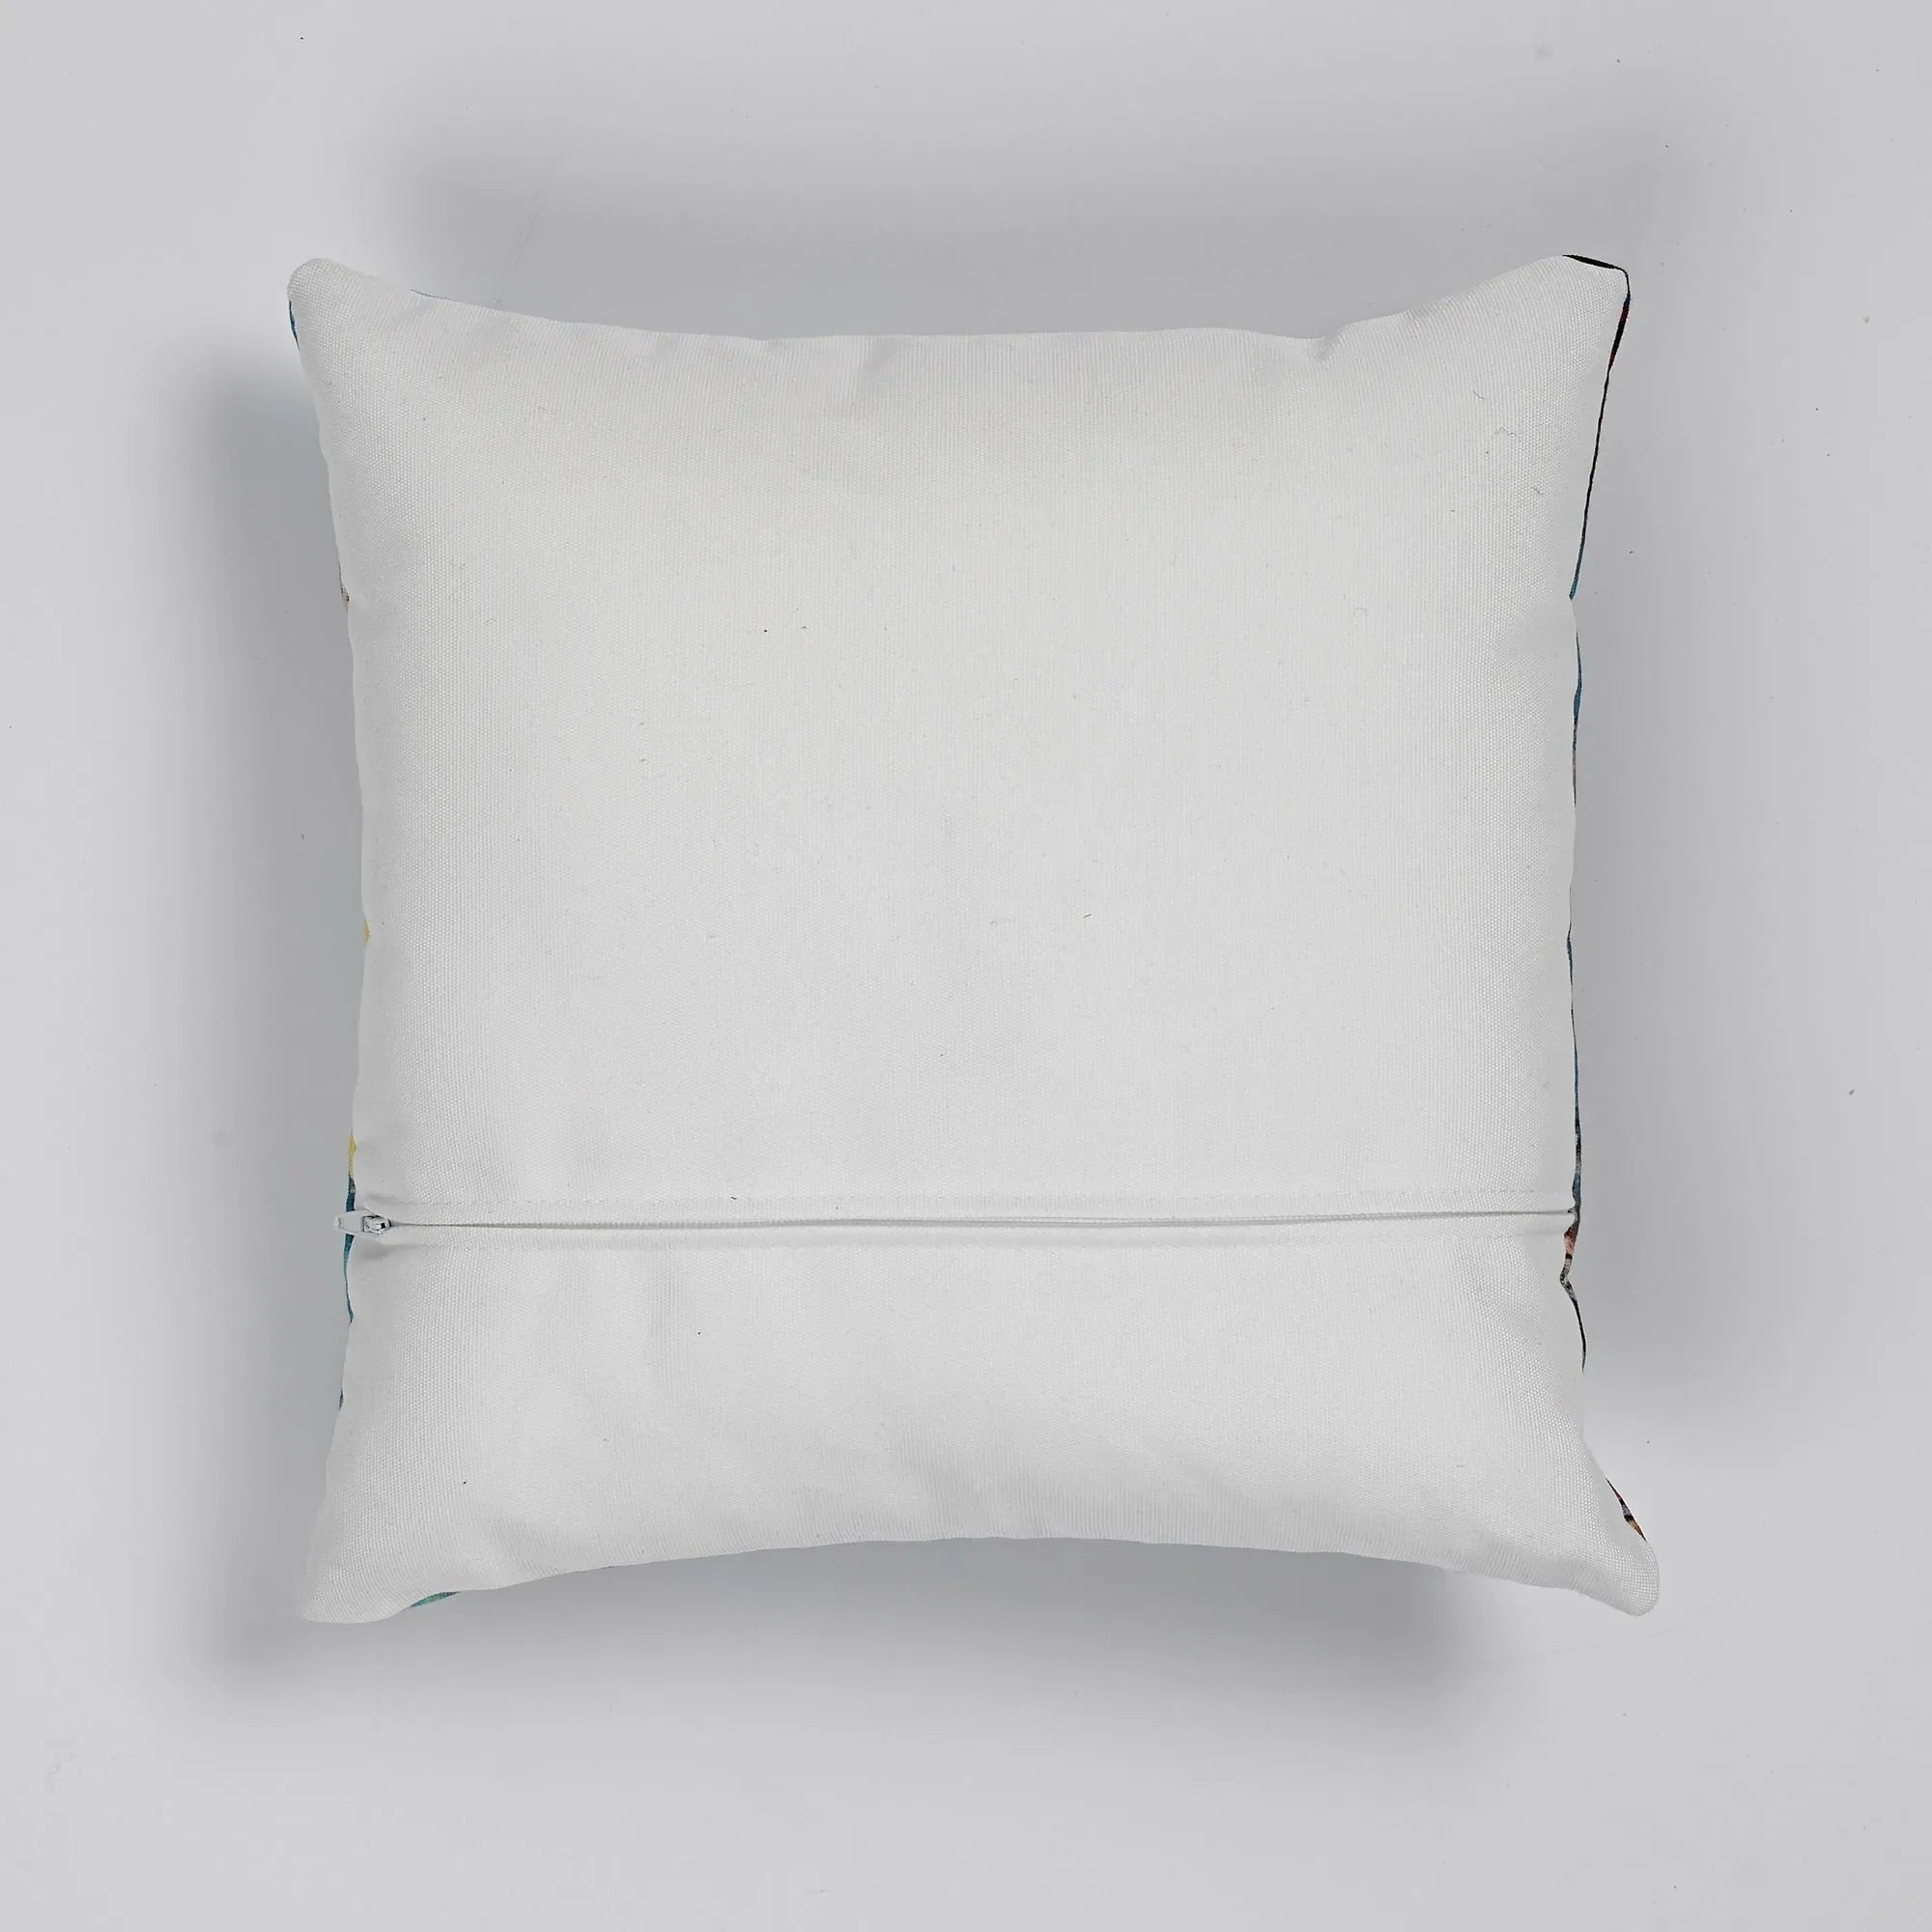 Action Men Cushion - Decorative Throw Pillow - Throw Pillows - Aesthetic Art